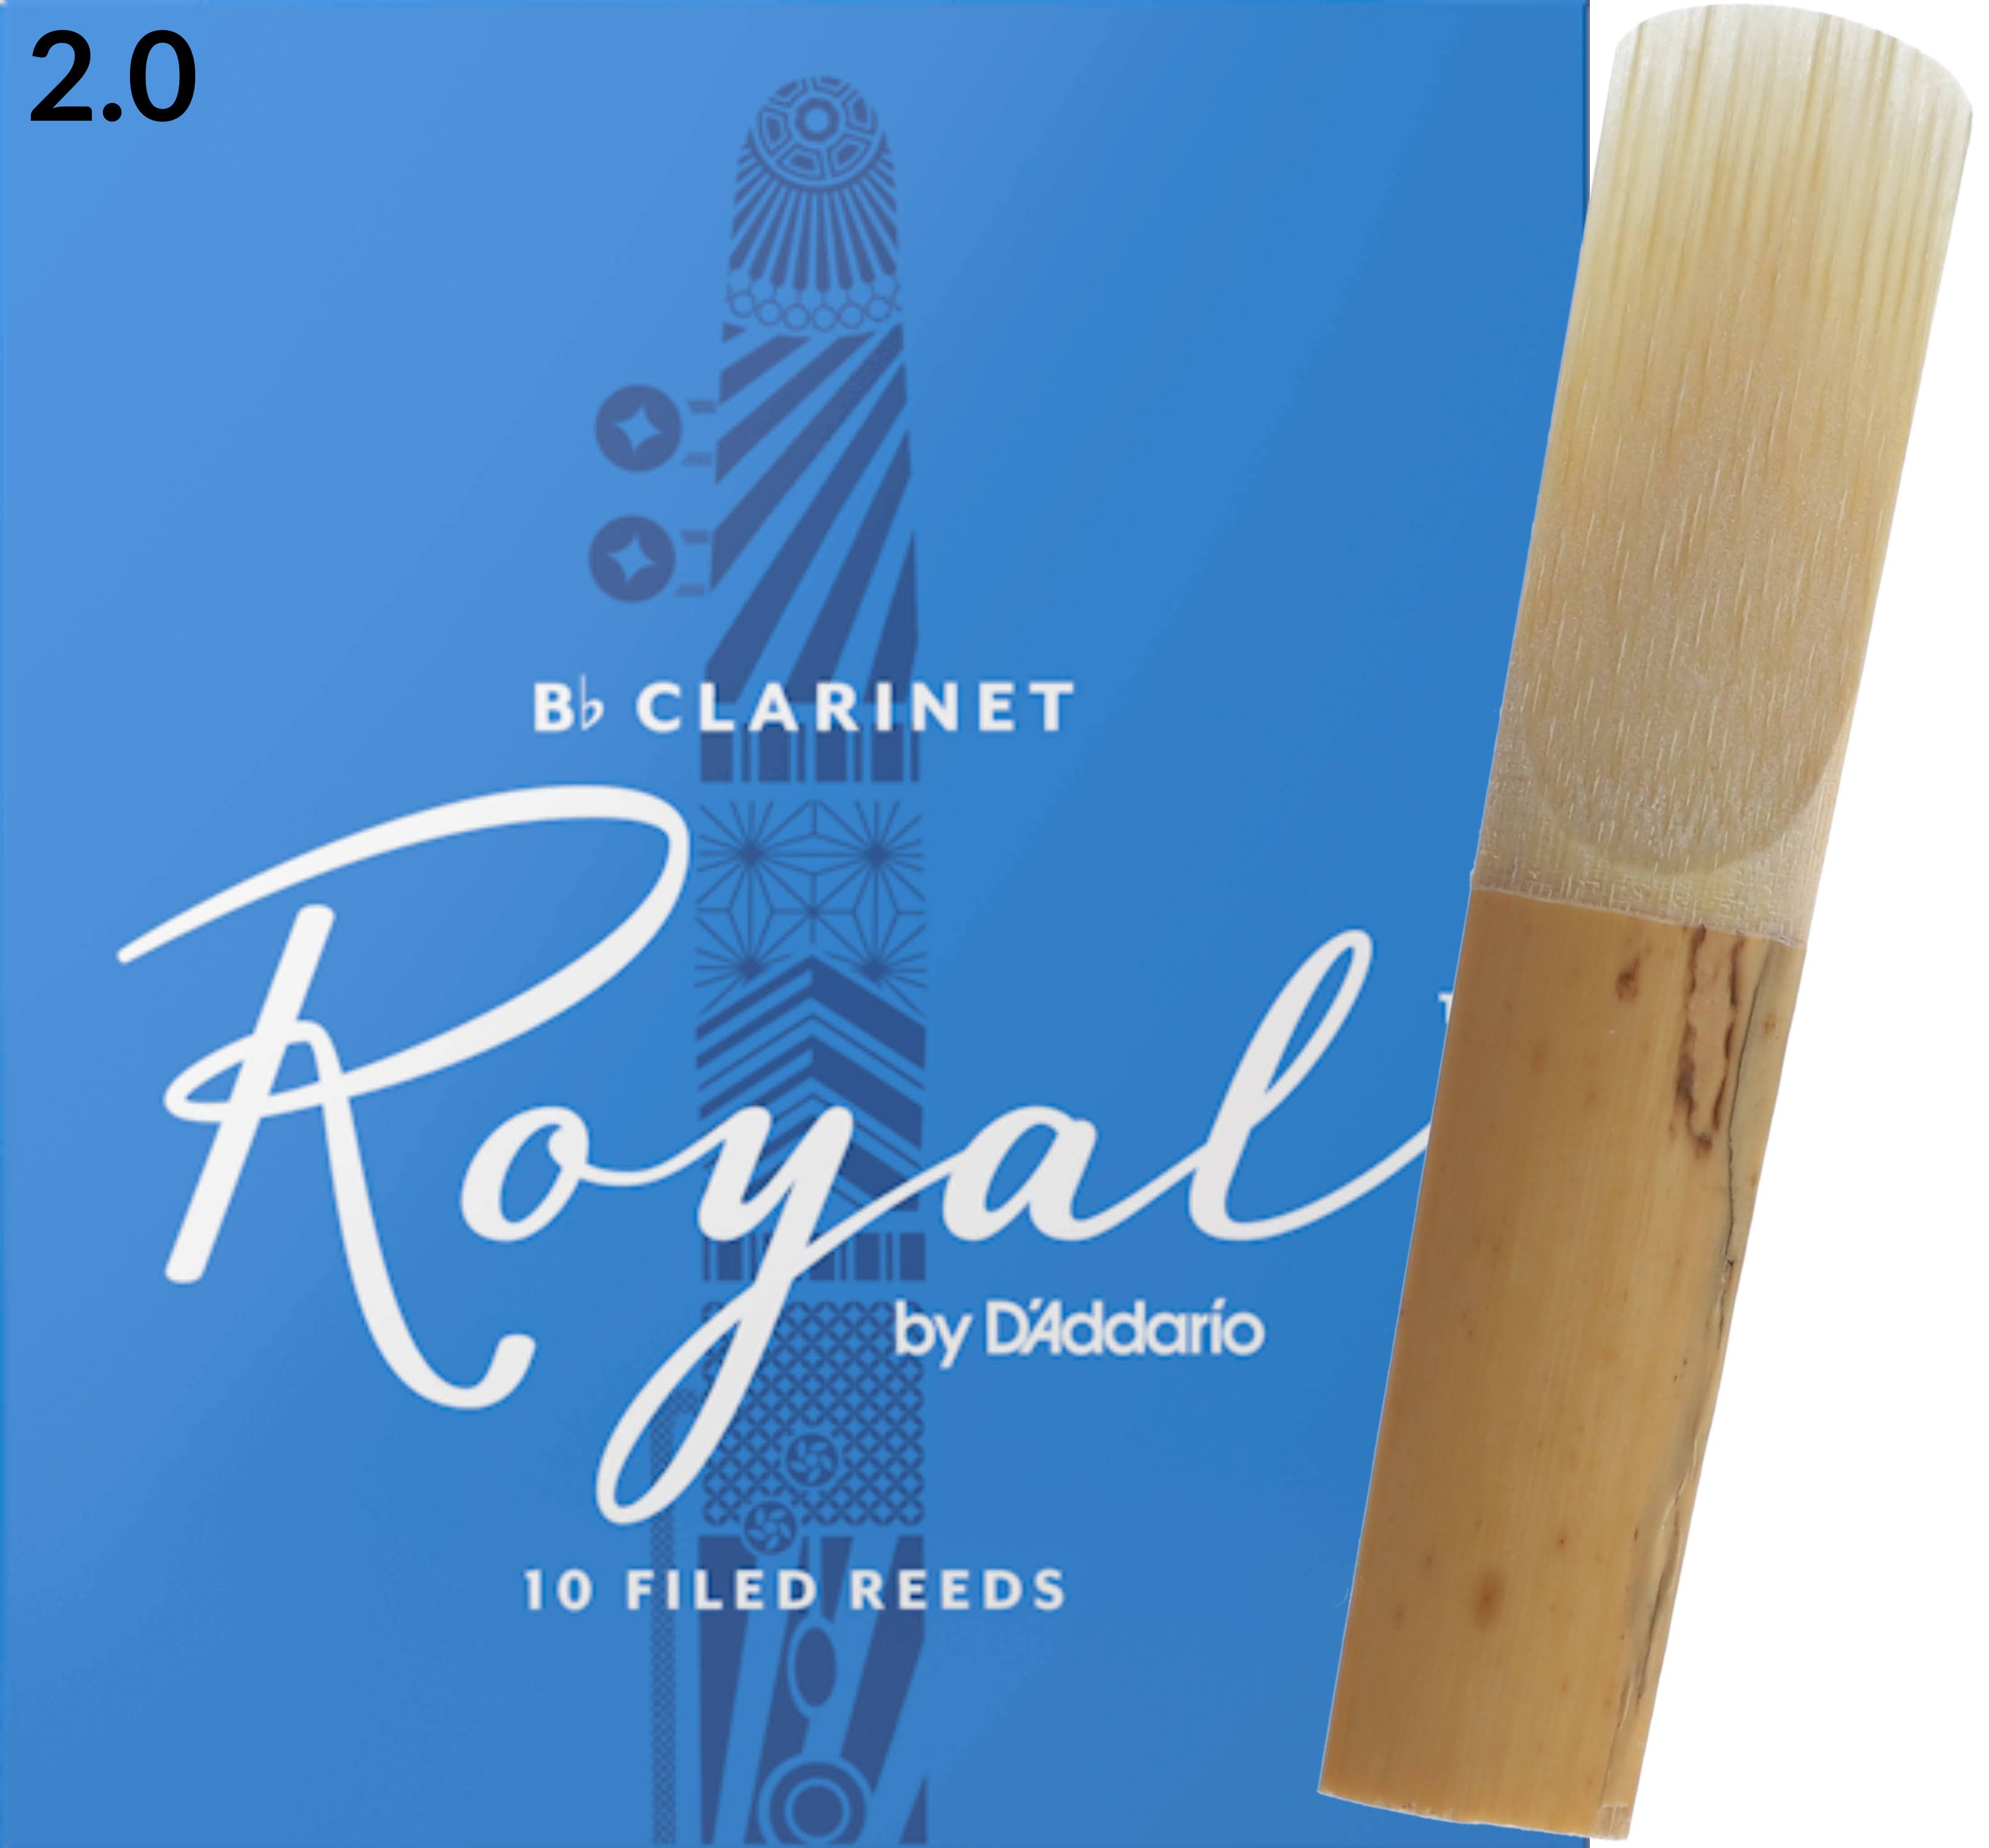 Rico Royal Bb Clarinet Reeds - Strength 2.0, 10pk